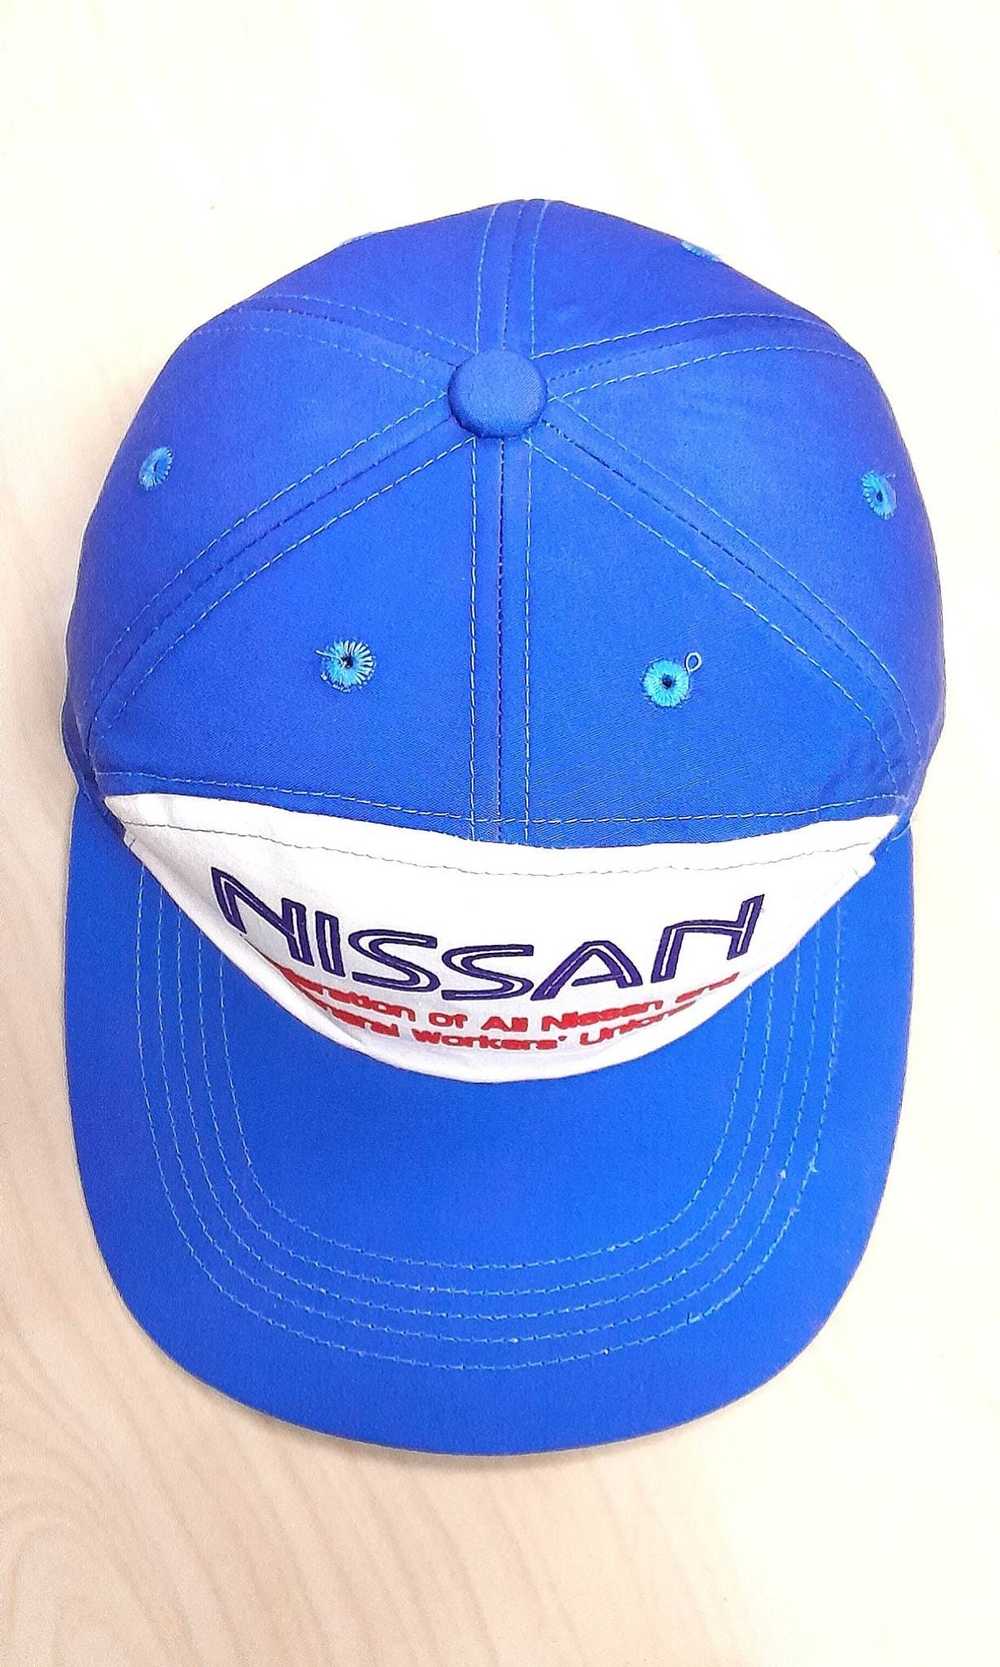 Racing × Very Rare × Vintage NISSAN Vintage Cap - image 6